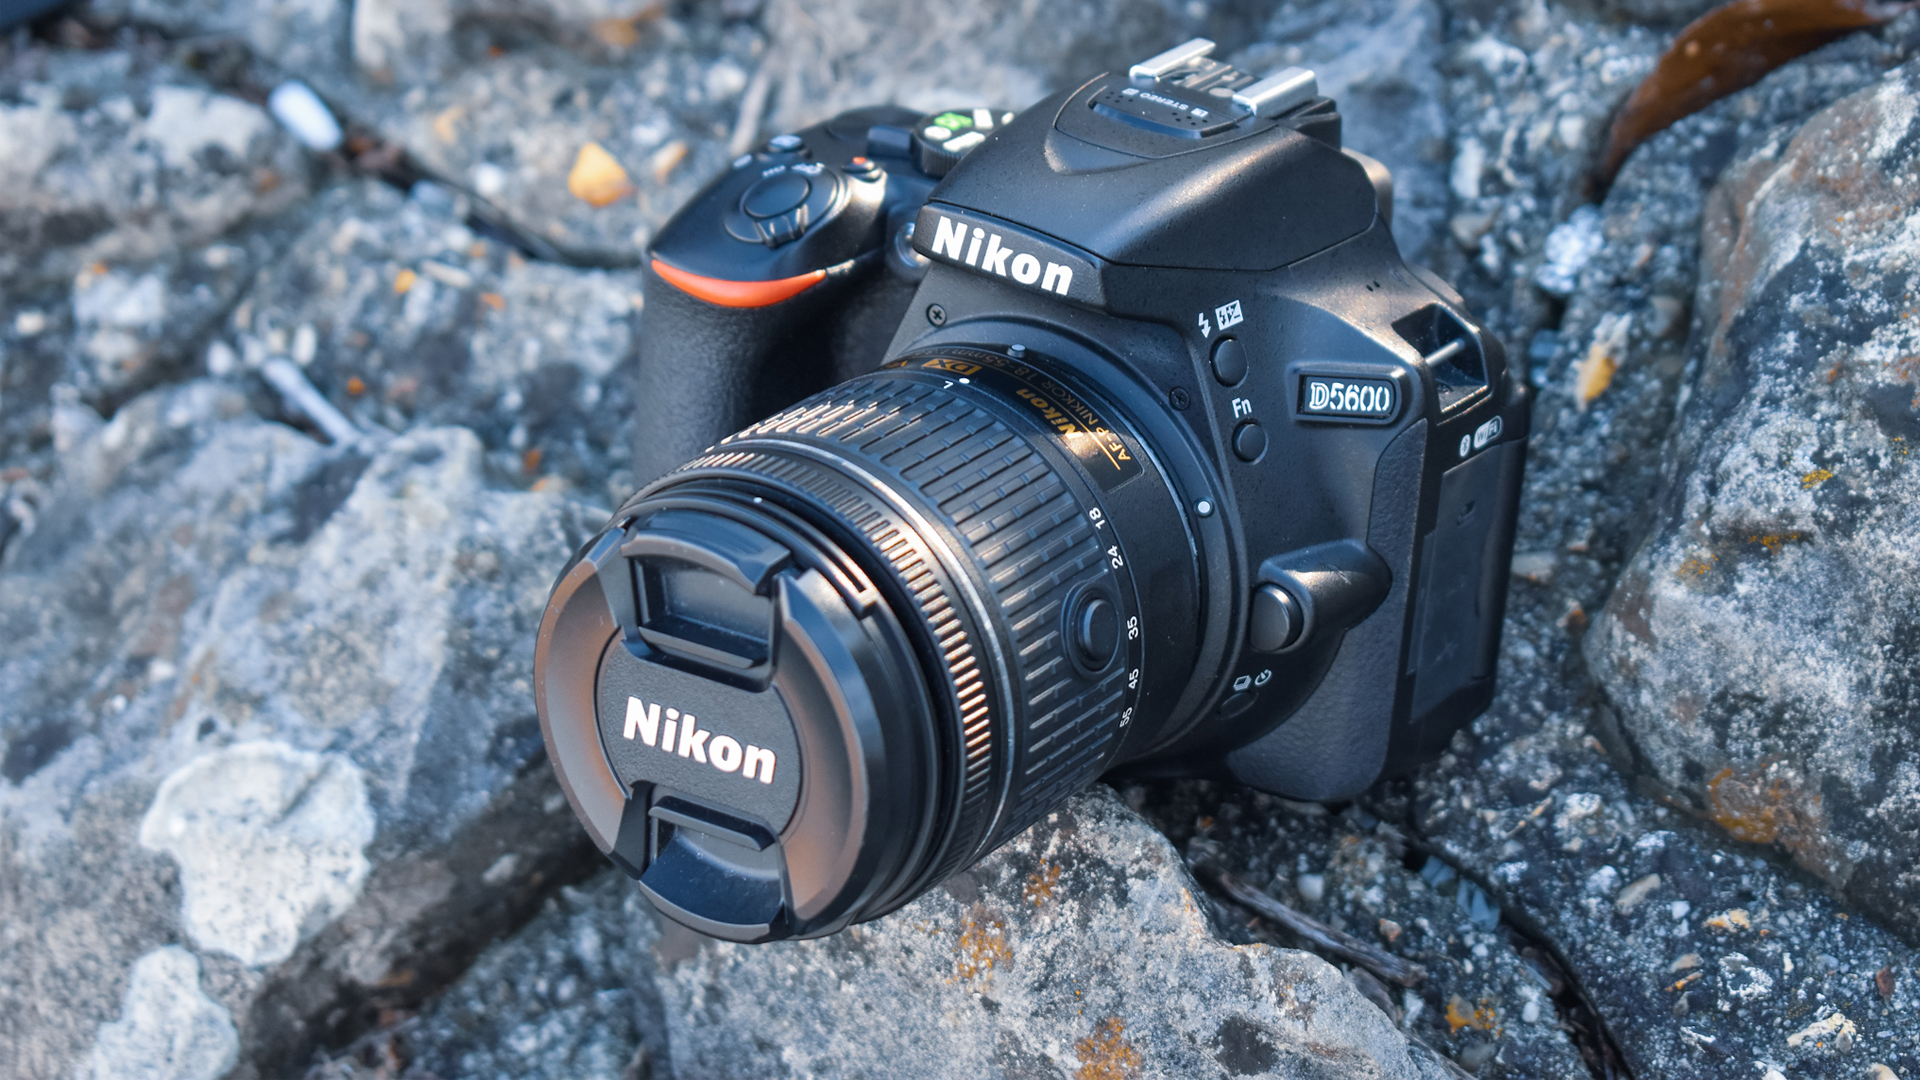 Nikon D5600 camera resting on rocks